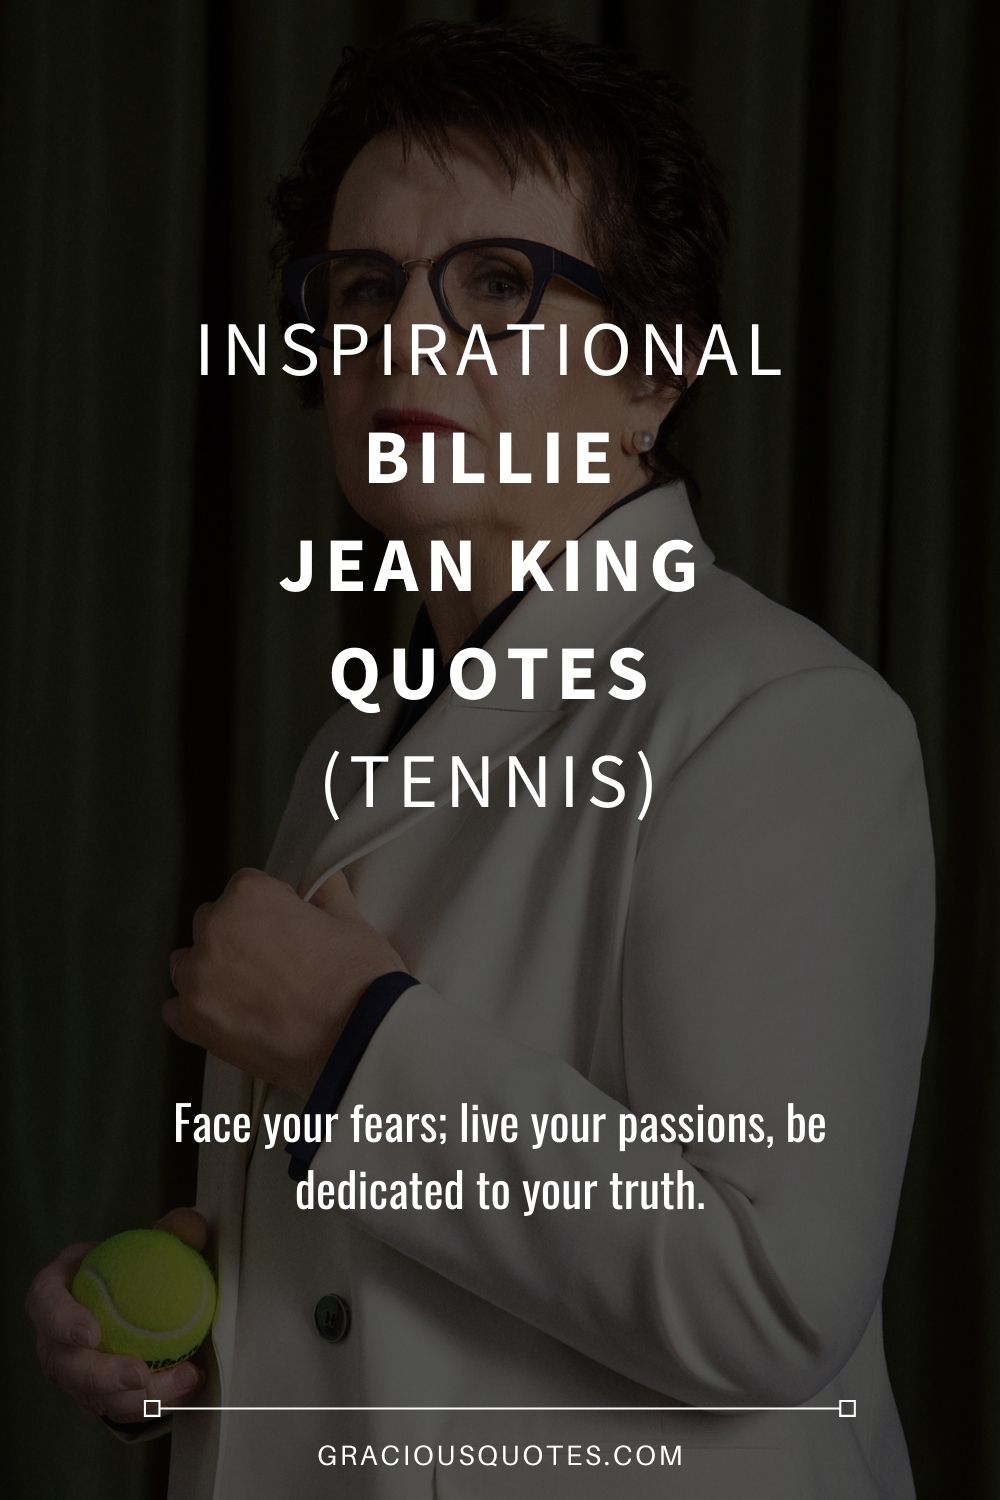 Inspirational Billie Jean King Quotes (TENNIS) - Gracious Quotes